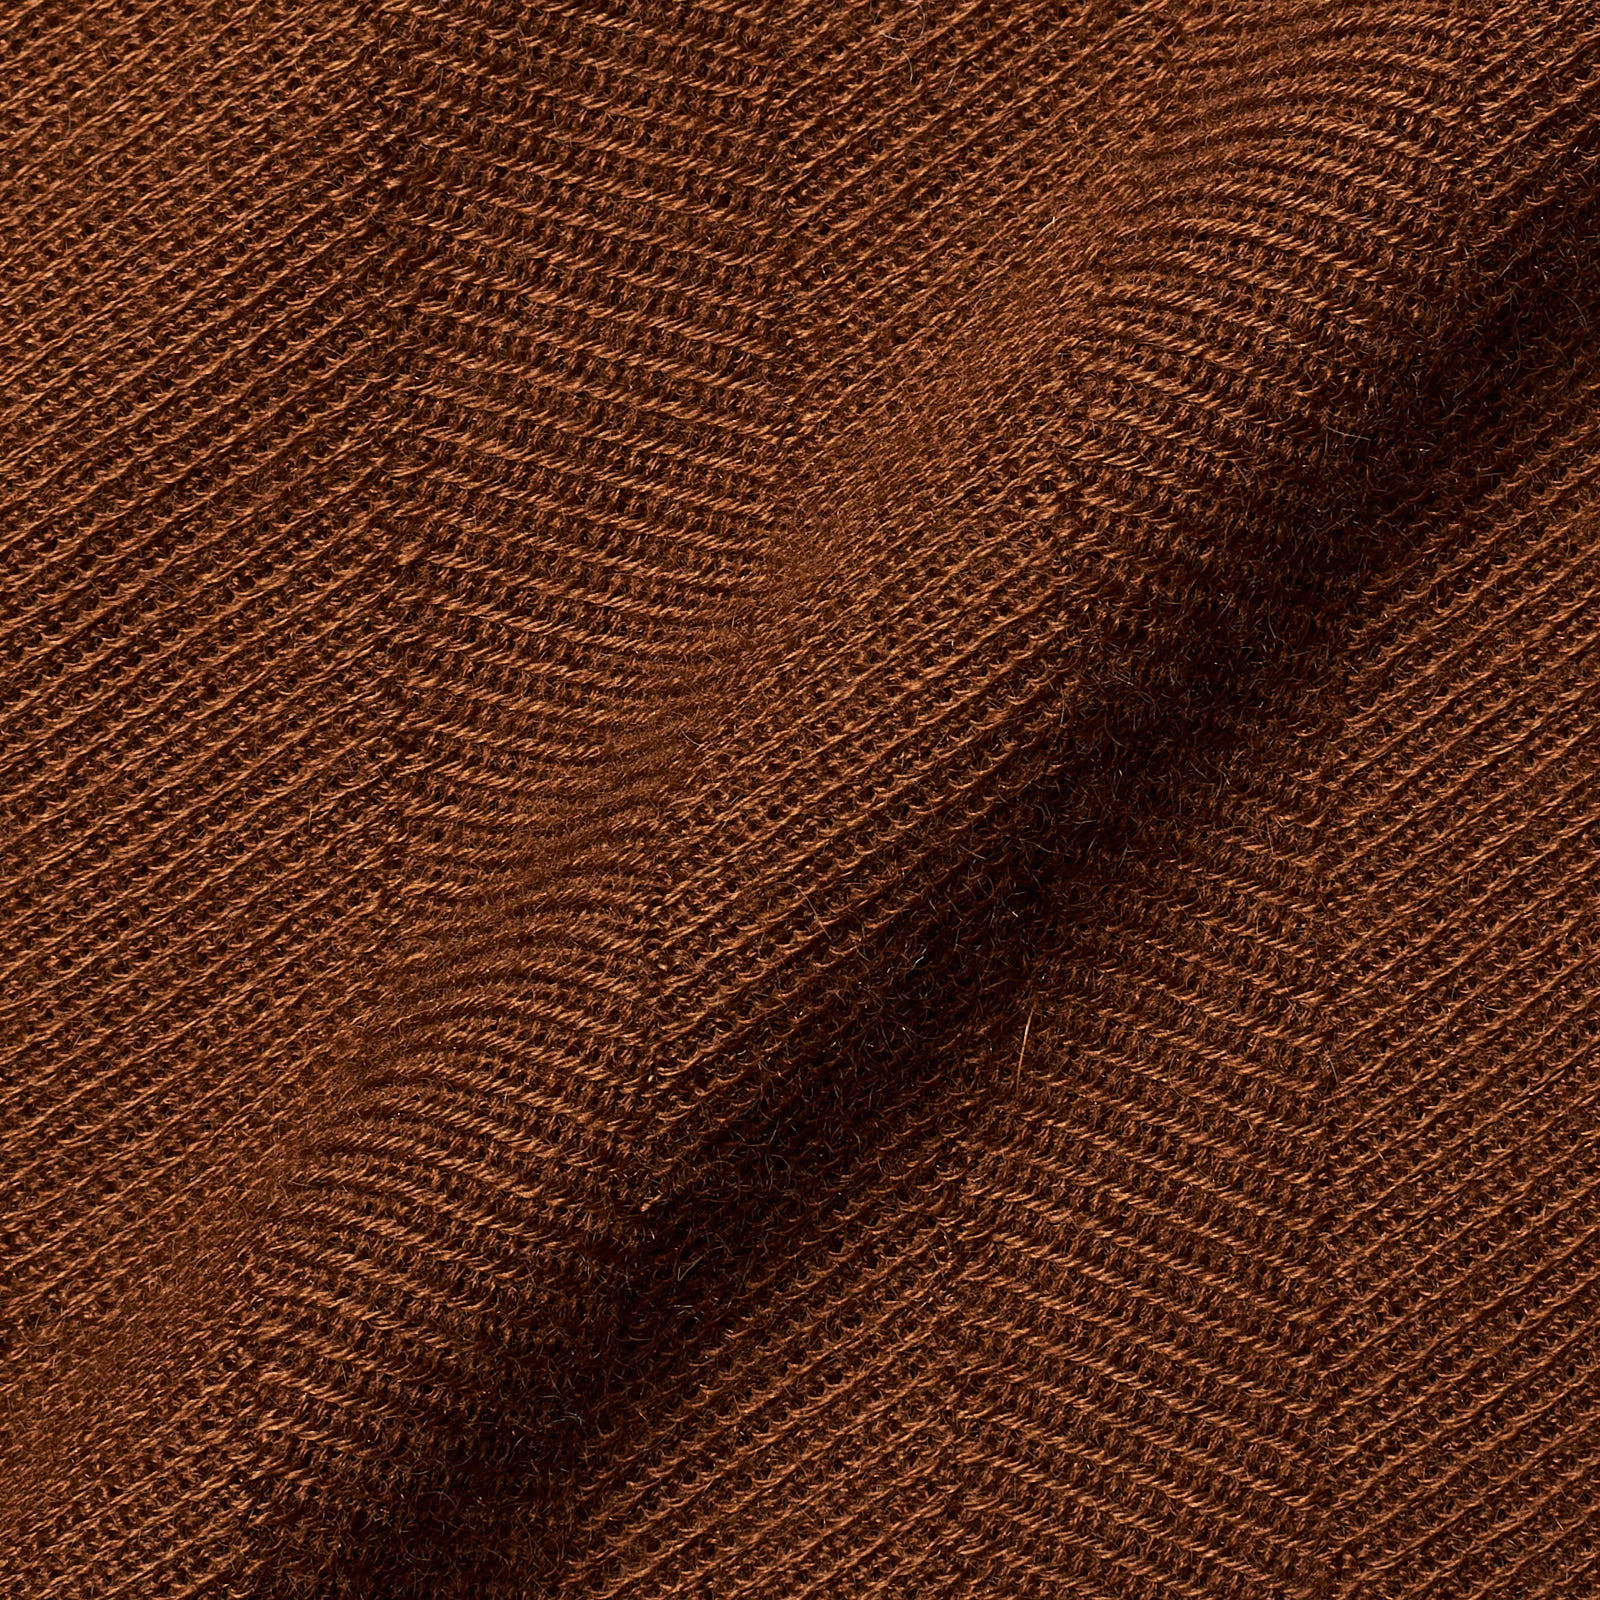 BERLUTI Paris Brown Herringbone Cashmere-Silk Knit Cardigan Sweater R50 NEW US M BERLUTI